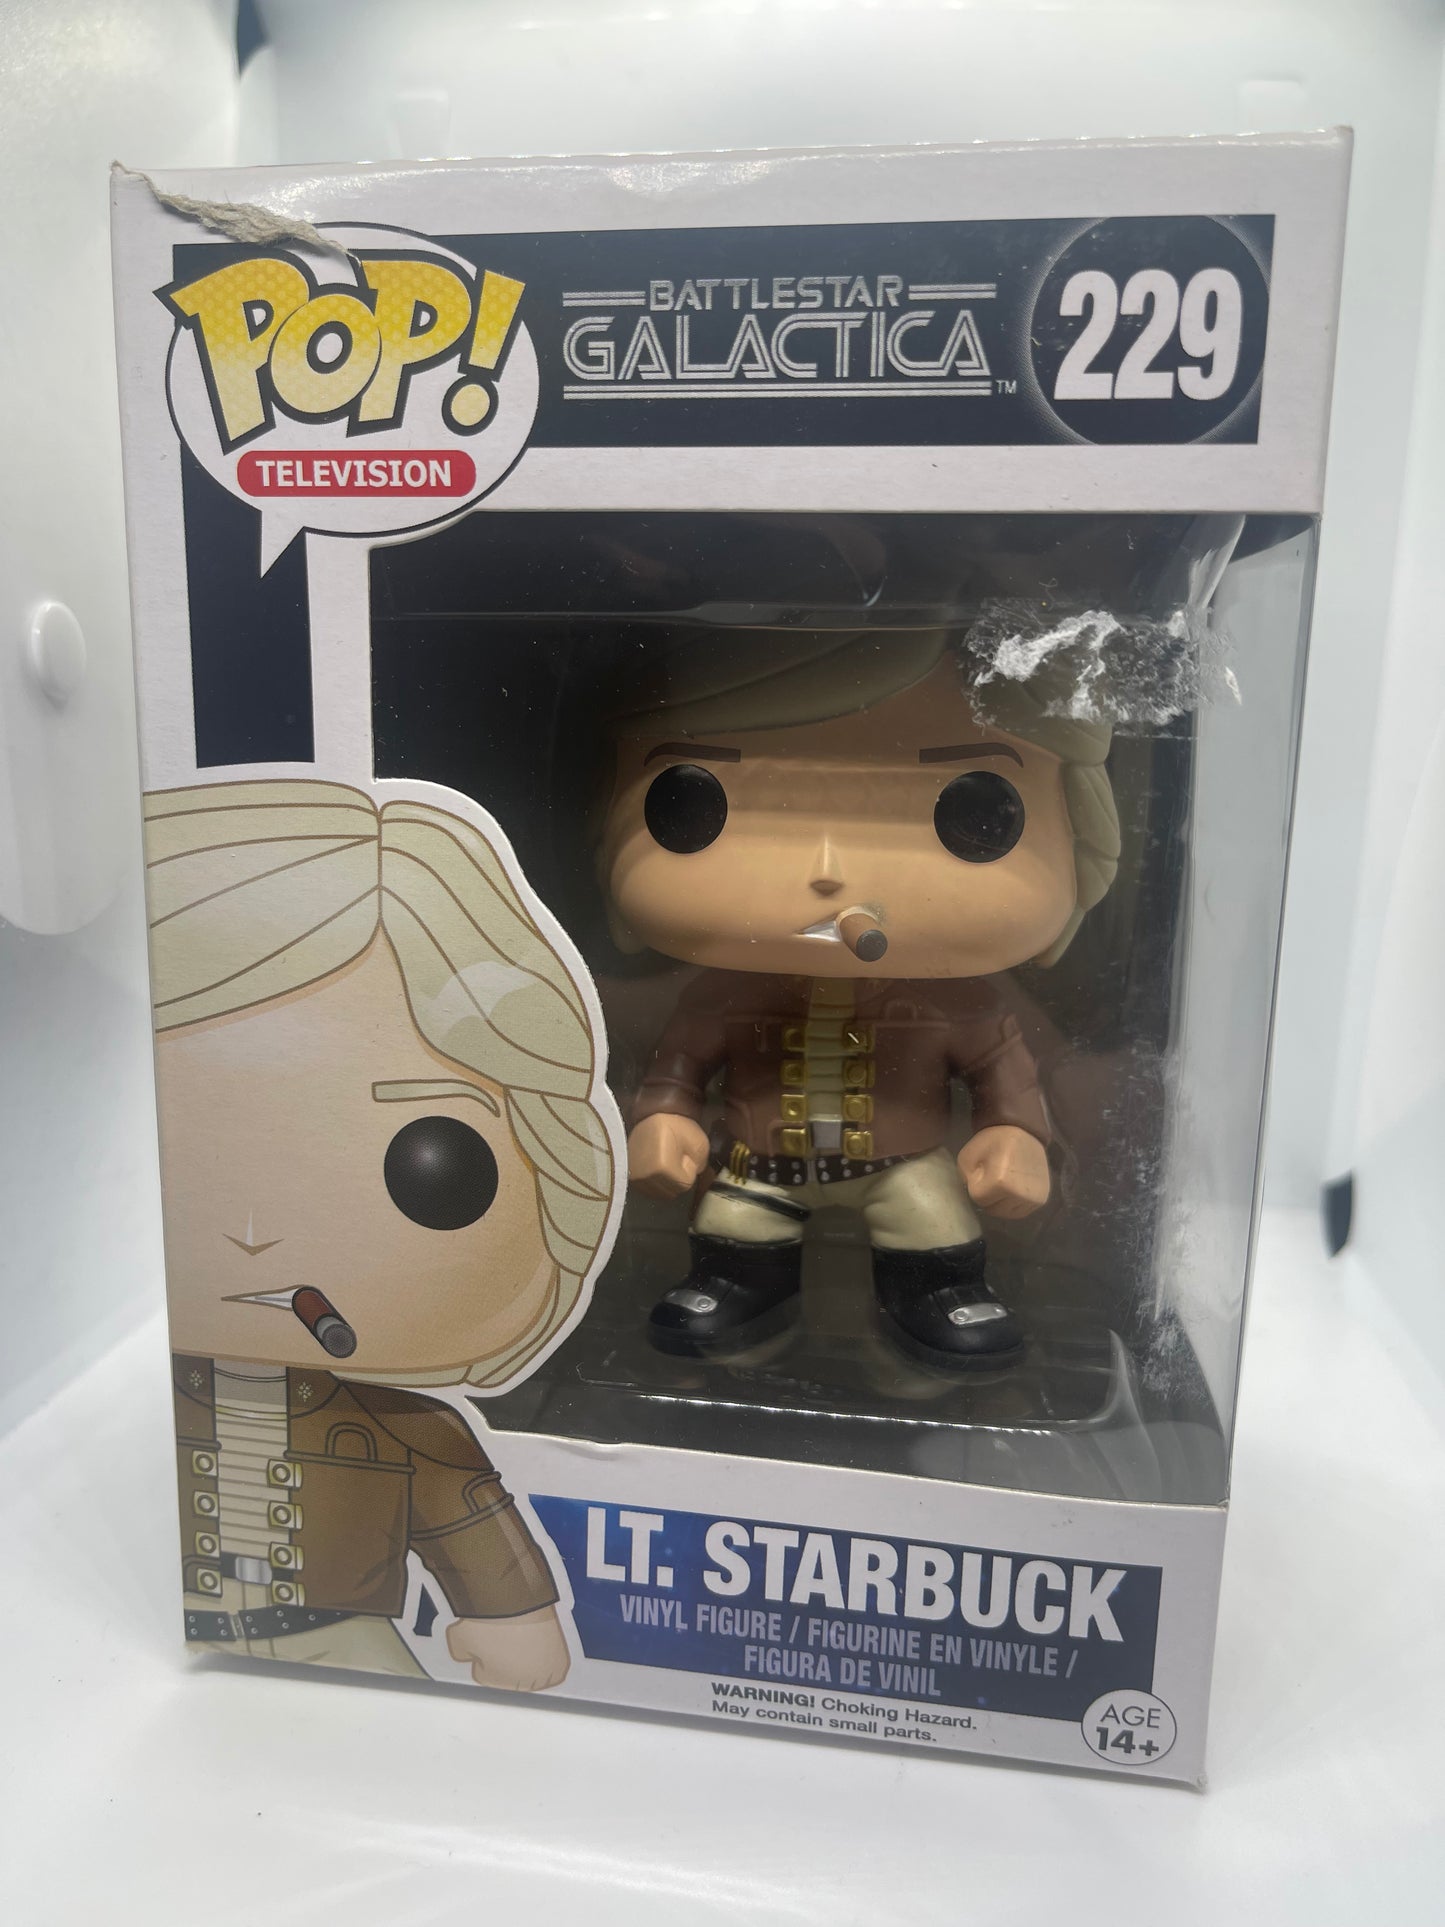 Battlestar Galactica 229 Lieutenant Starbuck Funko Pop! Vinyl Figure (Damaged Box)